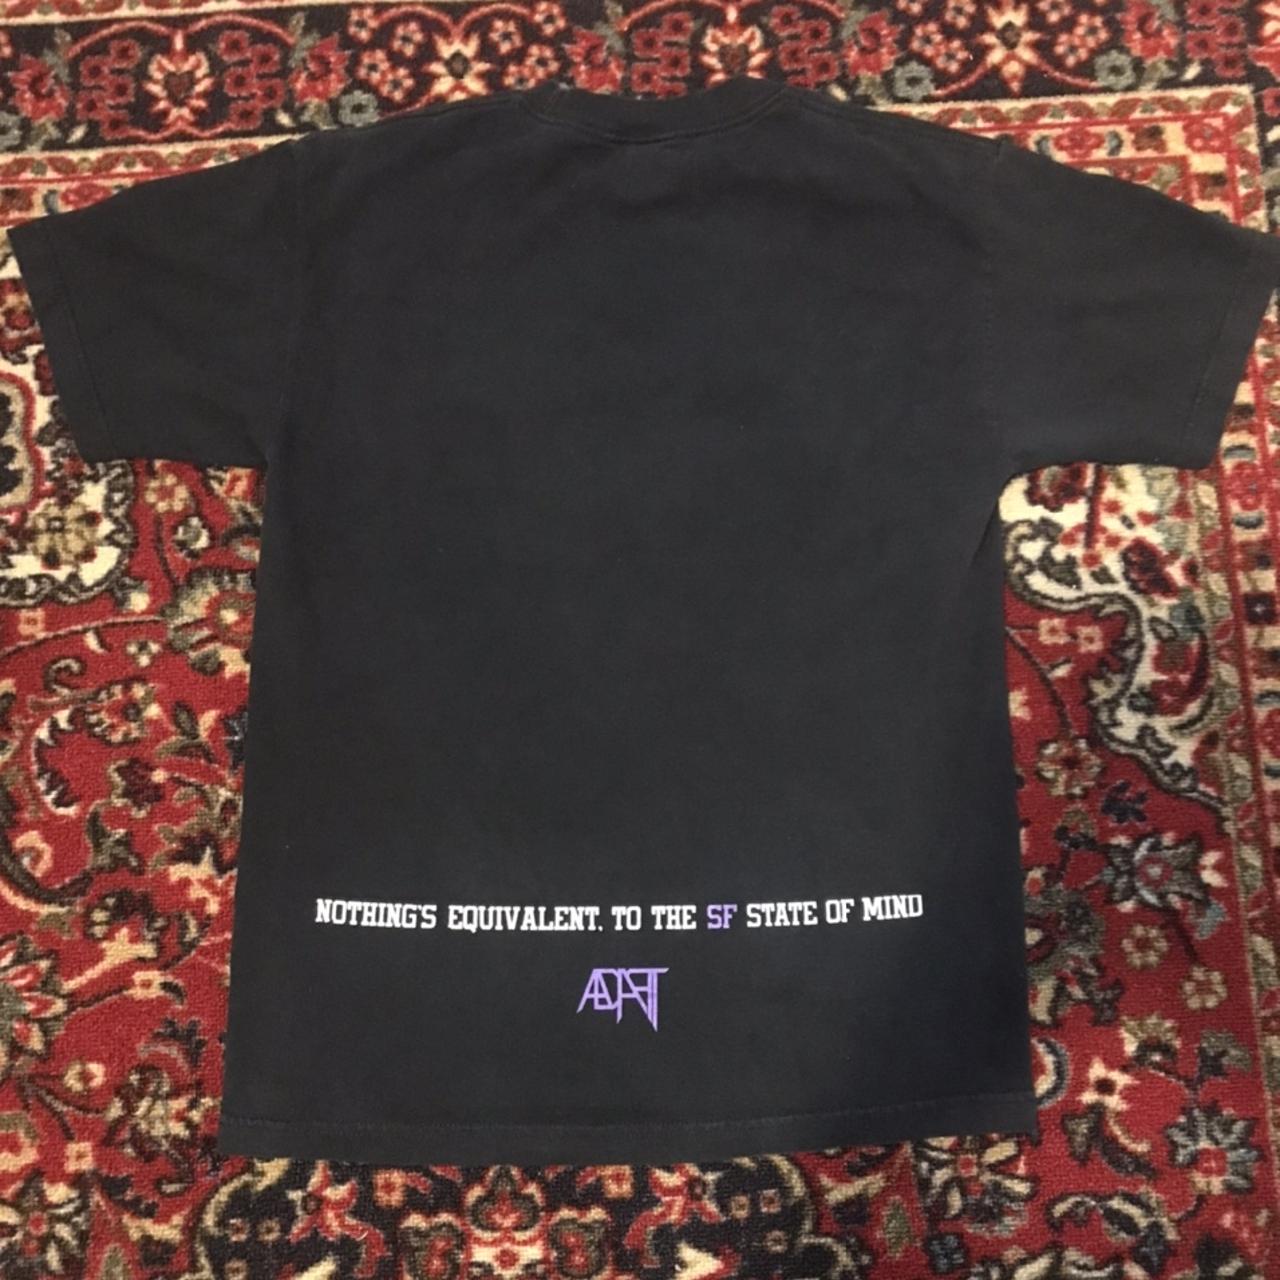 ADPT Men's Black and Purple T-shirt (2)